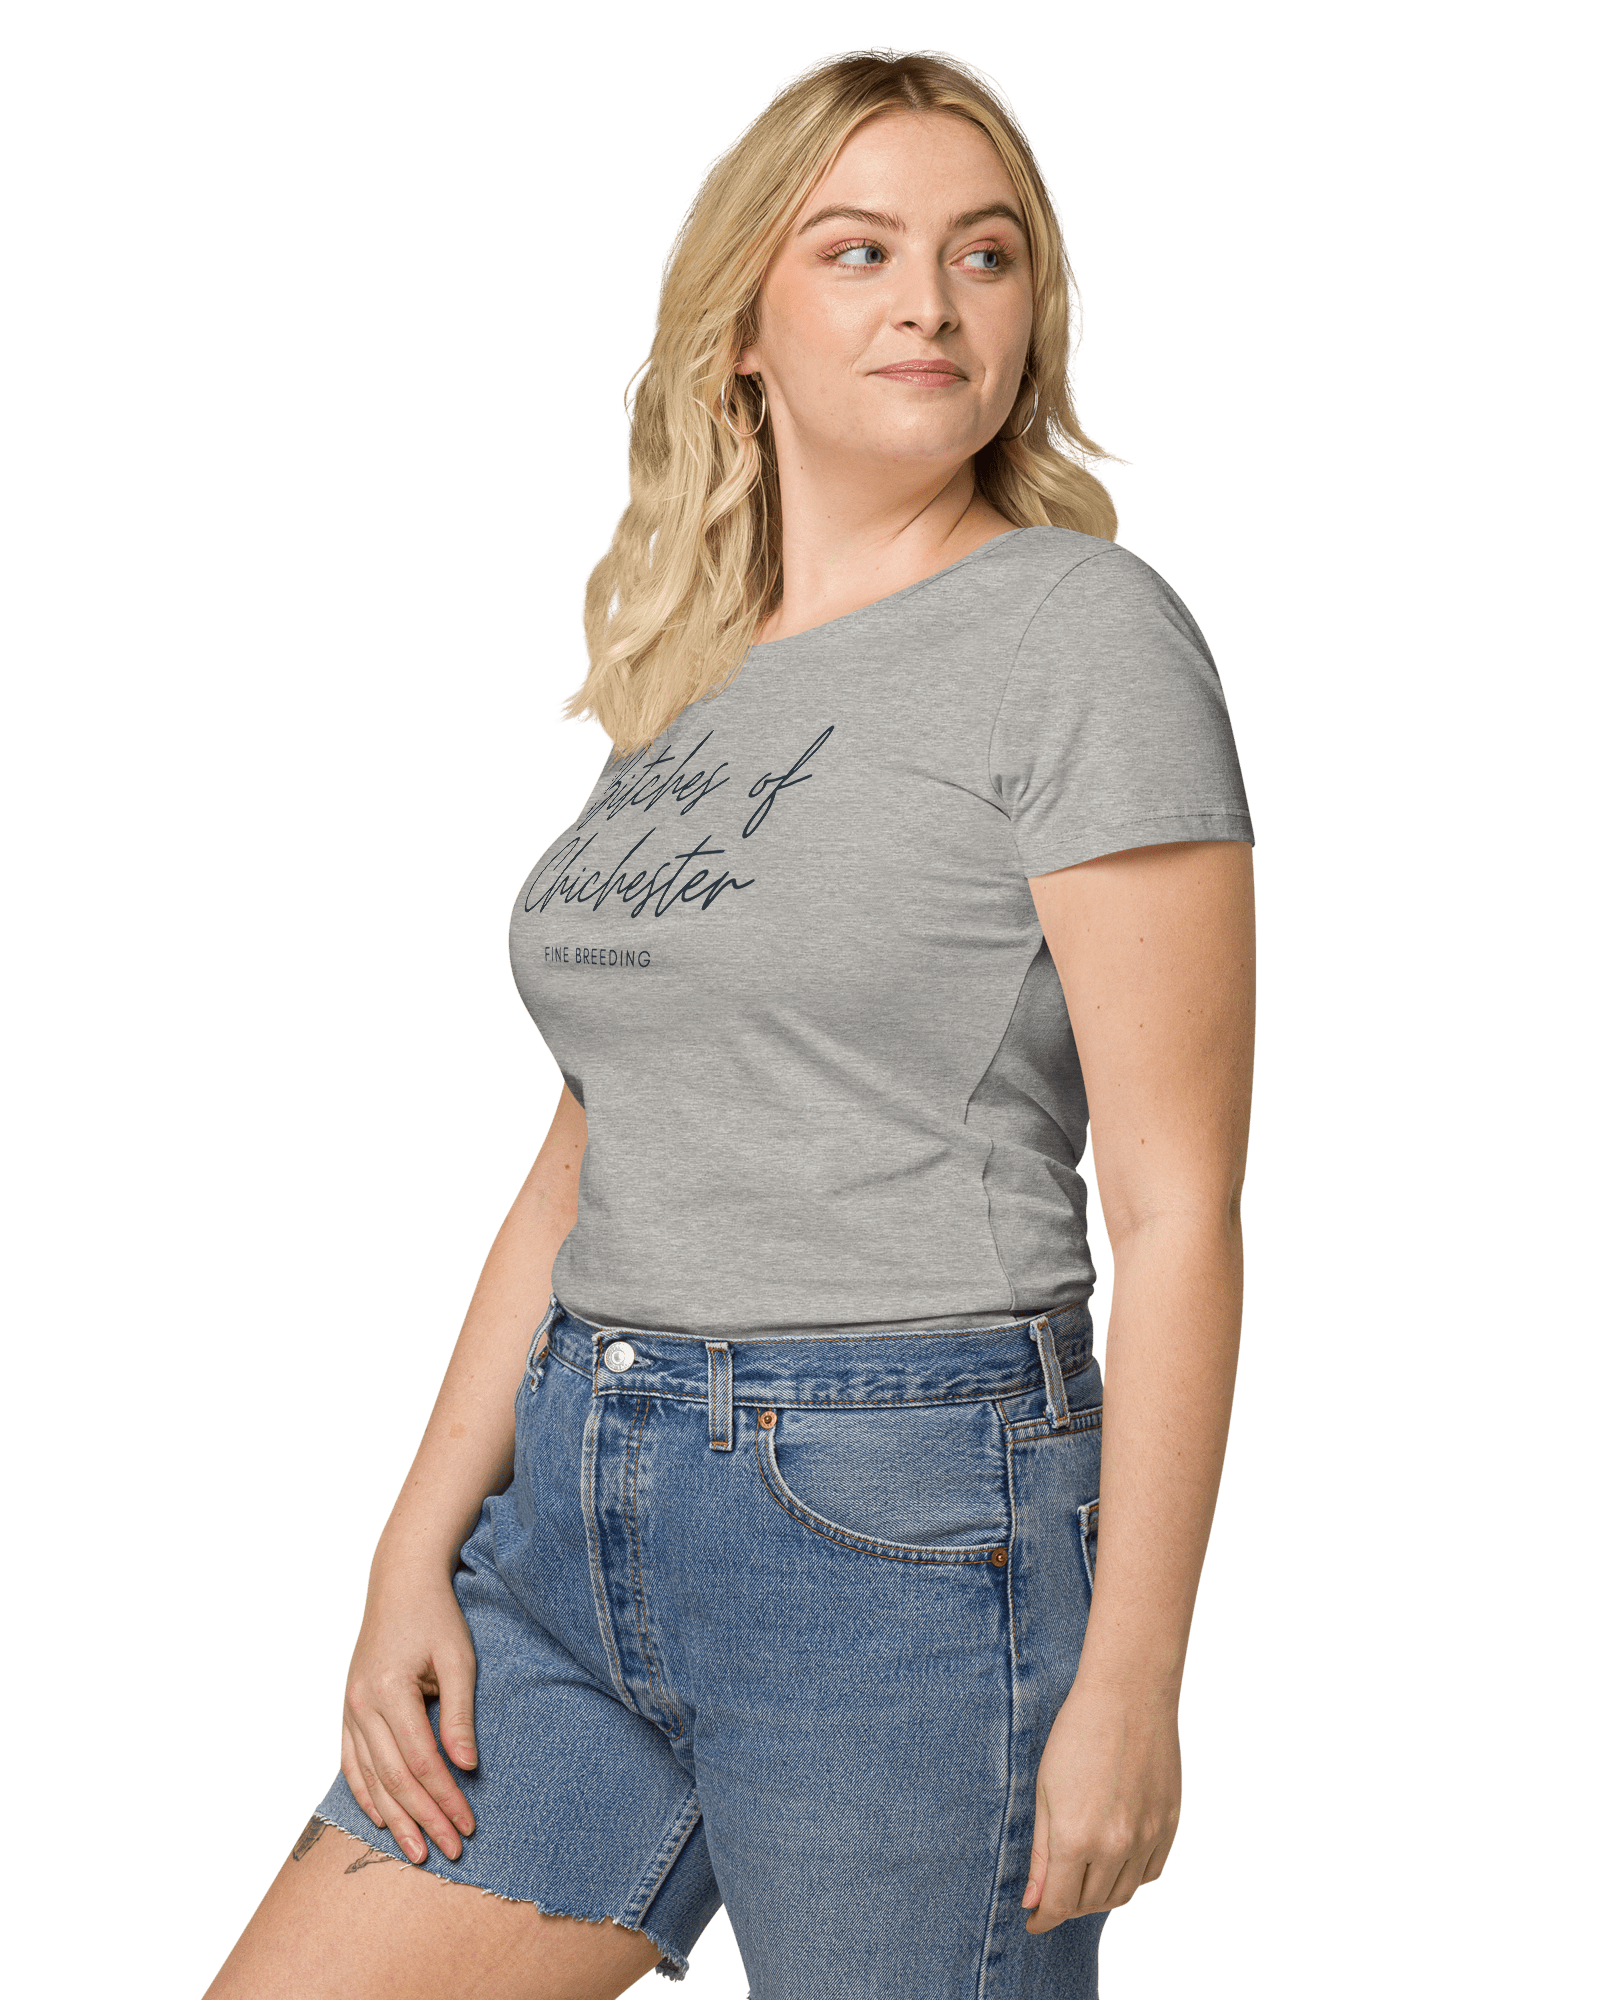 Bitches of Chichester | Women’s Organic T-shirt Grey melange / S Shirts & Tops Jolly & Goode